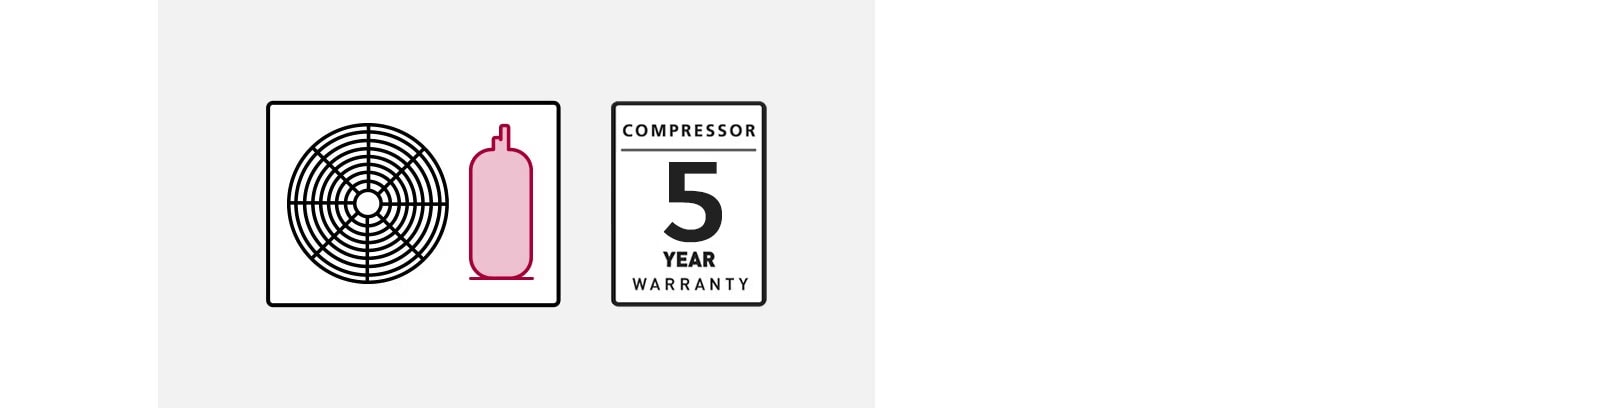 3-Year Warranty on the Compressor